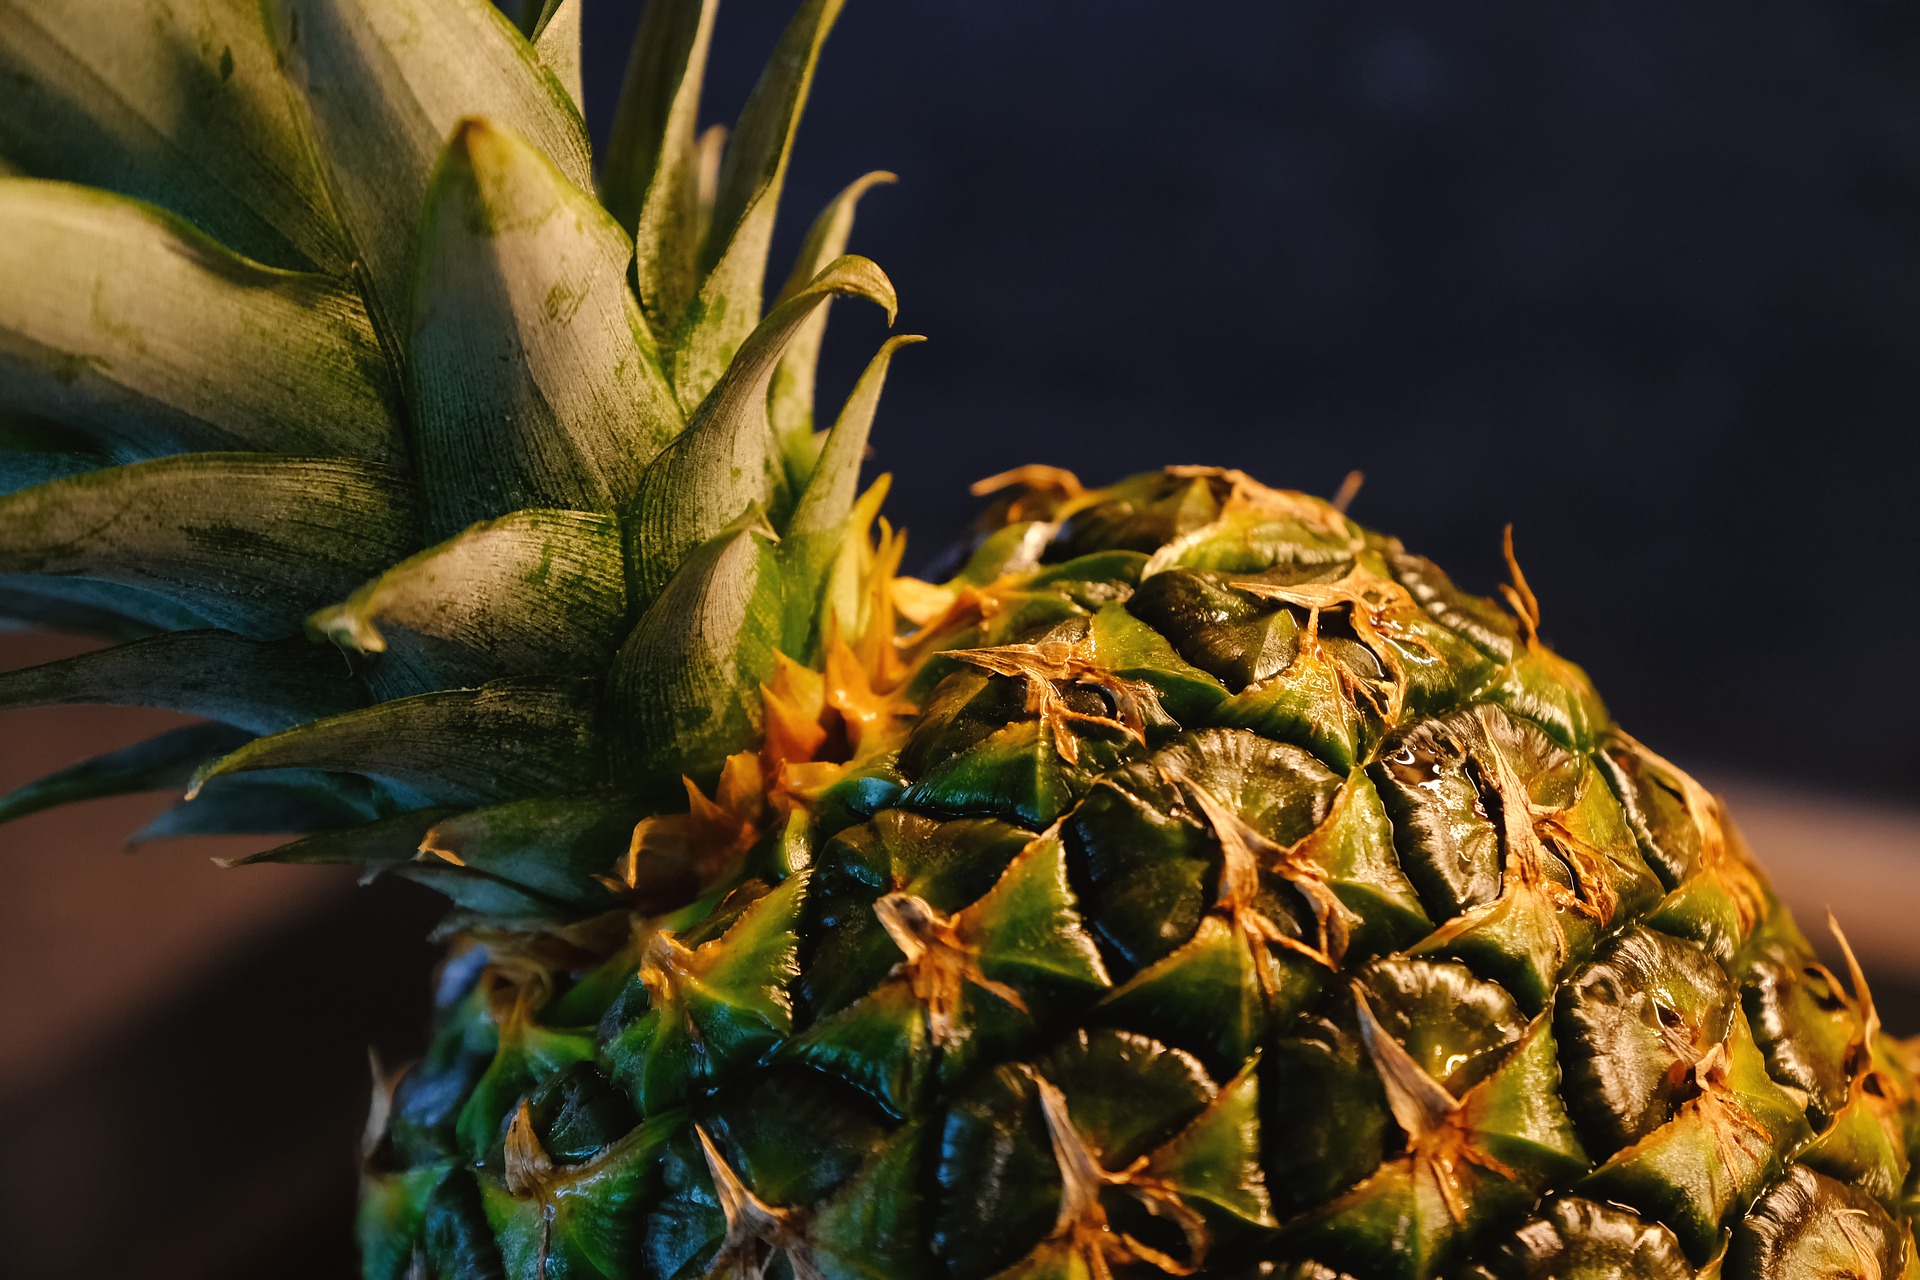 Pineapple Infused Rum Recipe D.I.Y.